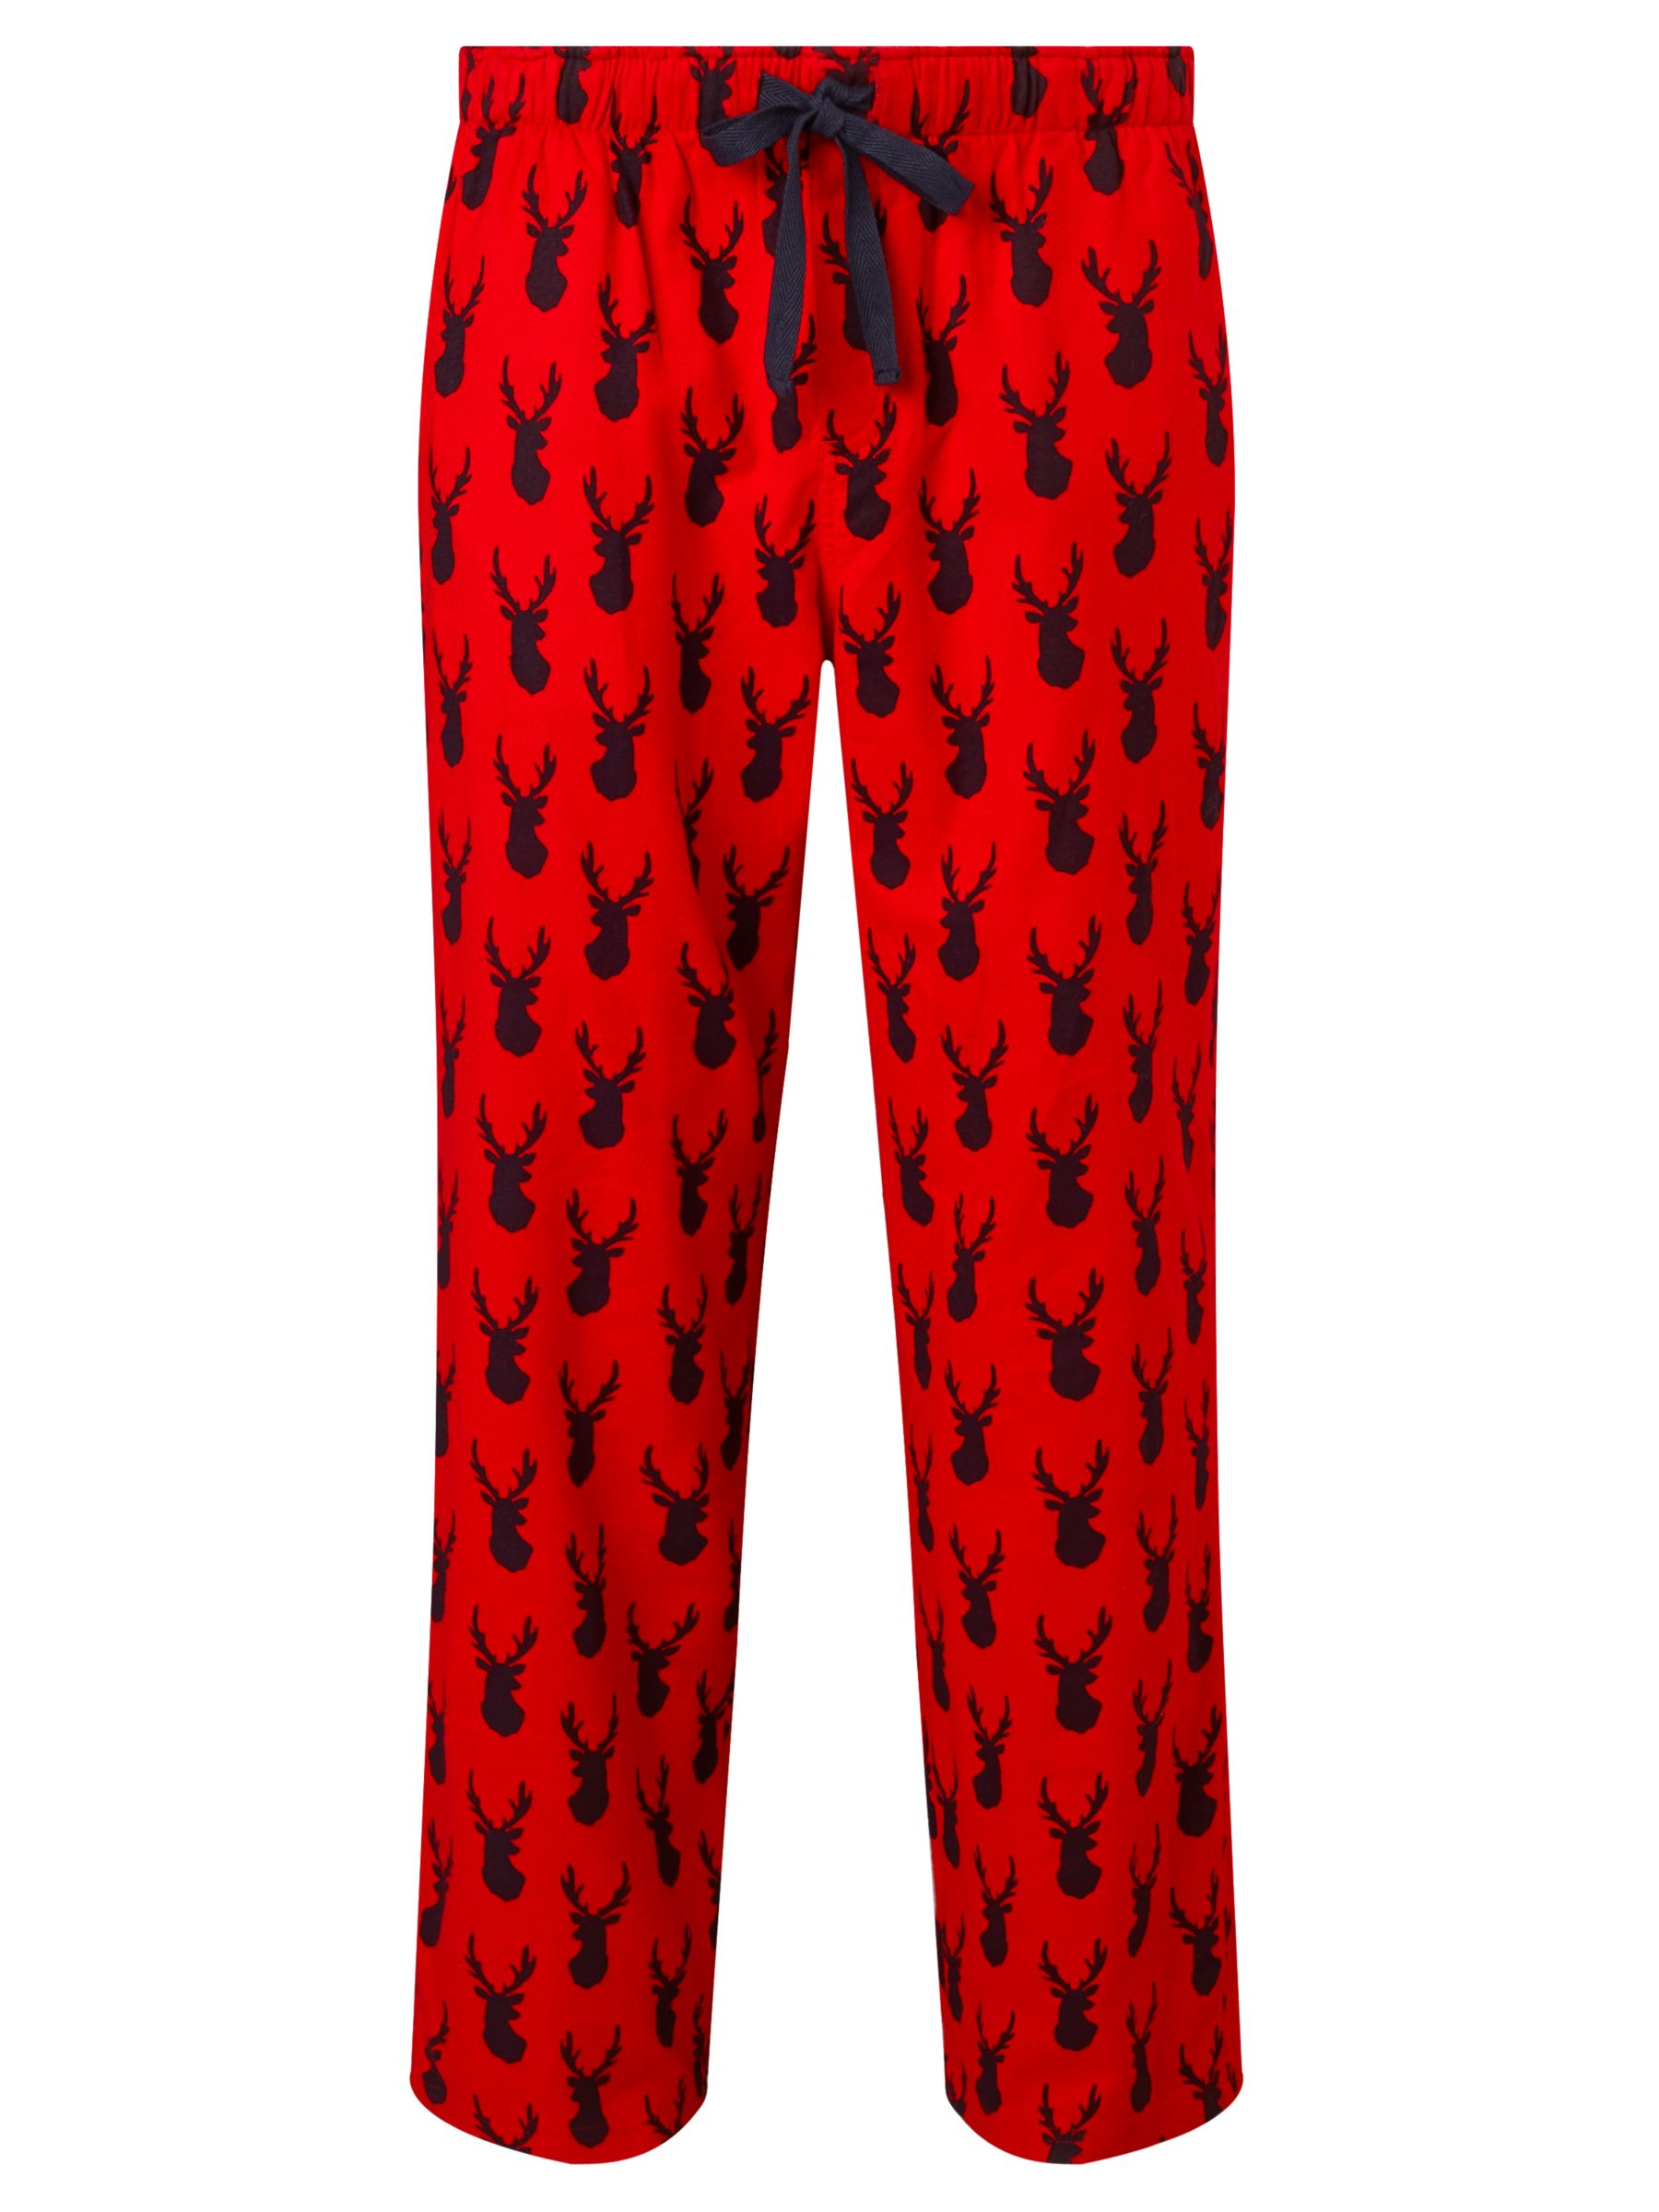 John Lewis Brushed Stag Print Cotton Pyjama Bottoms, Red